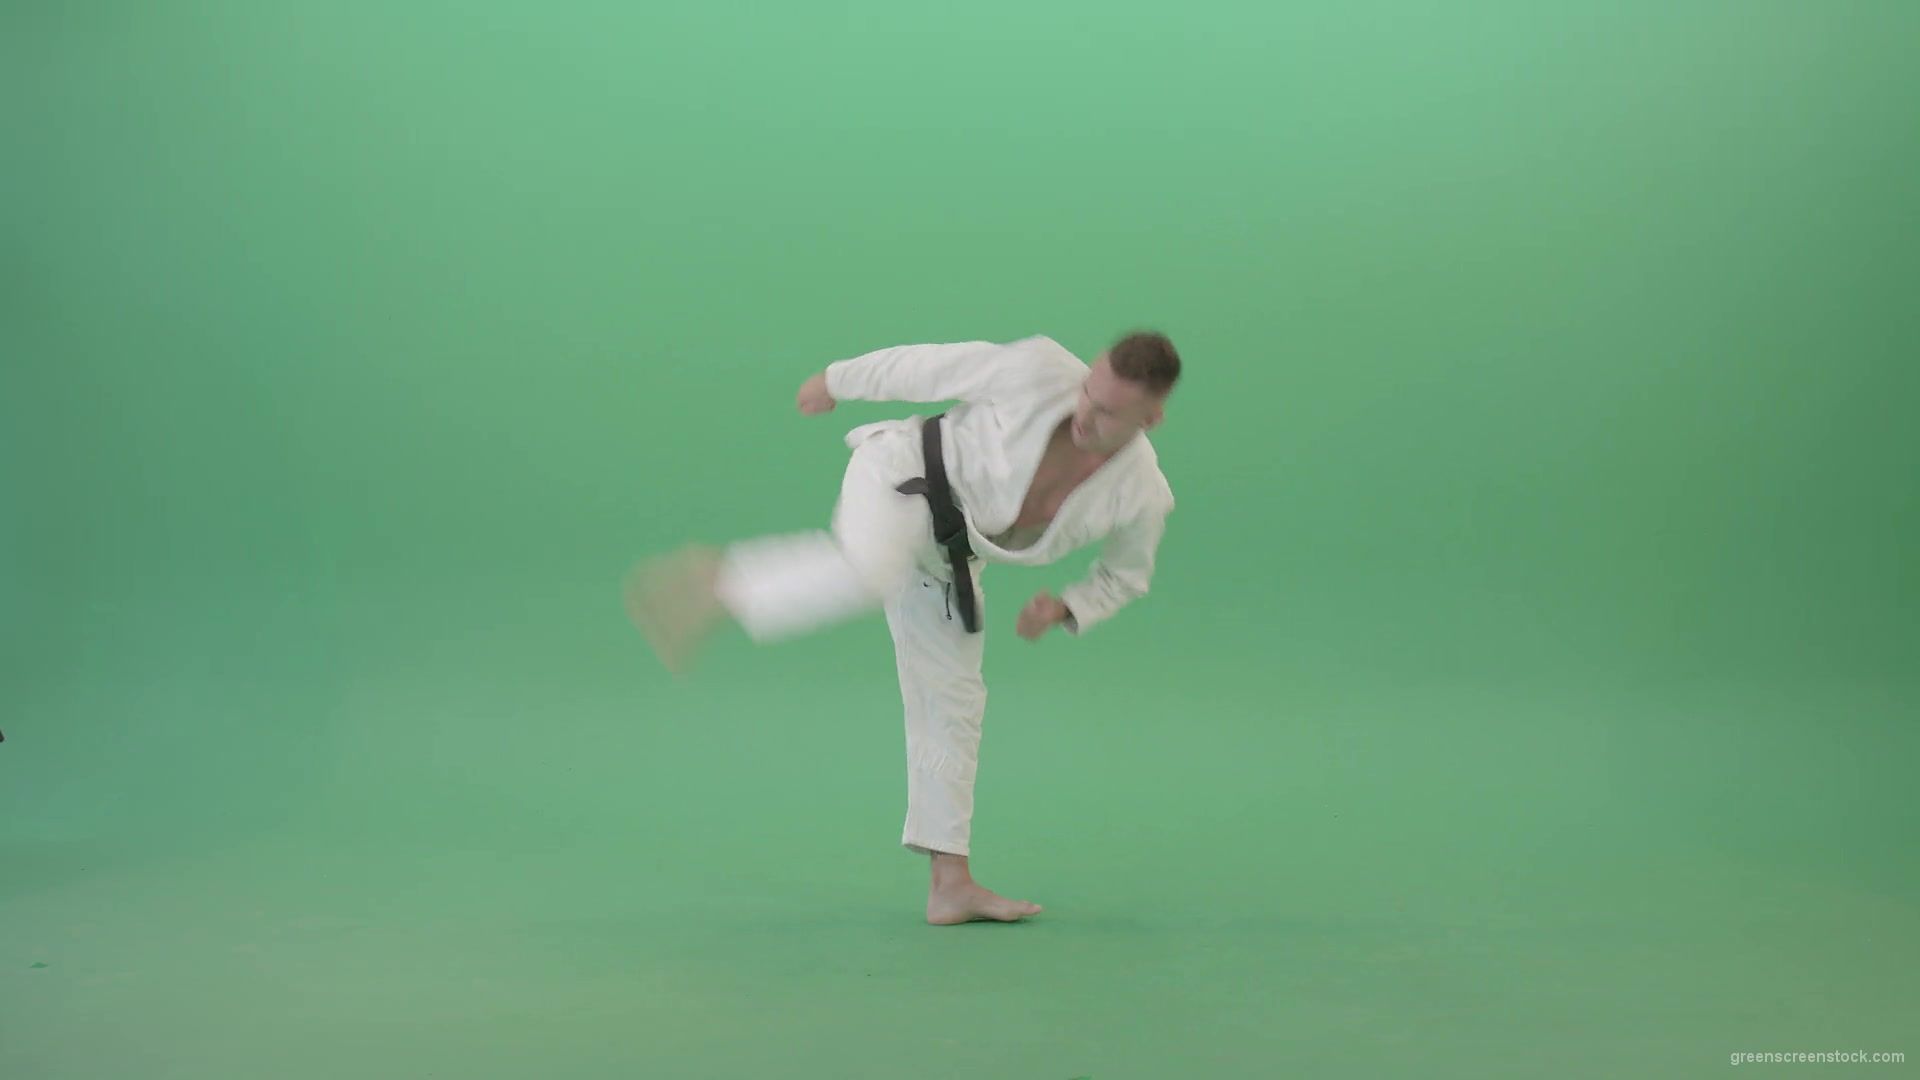 Mortal-Kombat-by-Karate-Ju-Jutsu-trainer-sportsman-isolated-on-green-screen-4K-Video-Footage-1920_002 Green Screen Stock